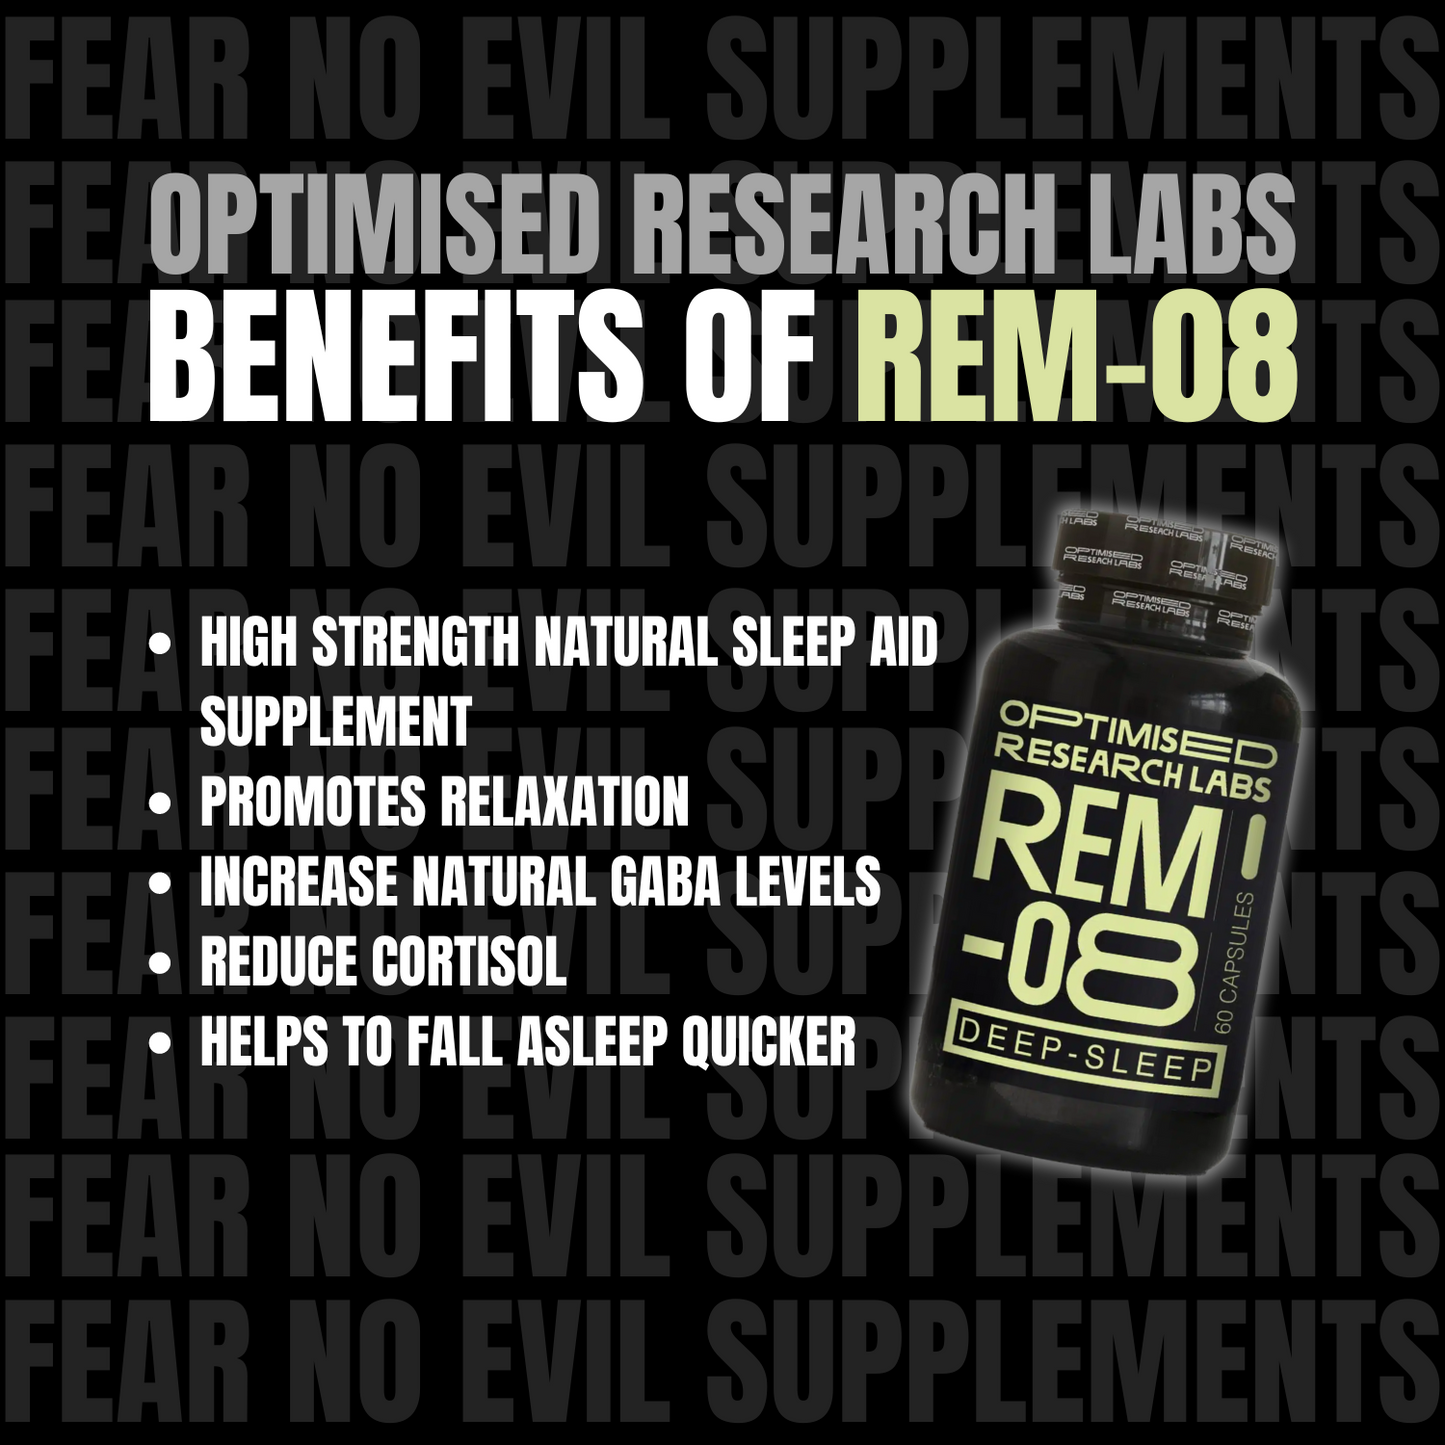 BENEFITS OF ORL DEEP SLEEP REM-08 NATURAL SLEEP AID SUPPLEMENT